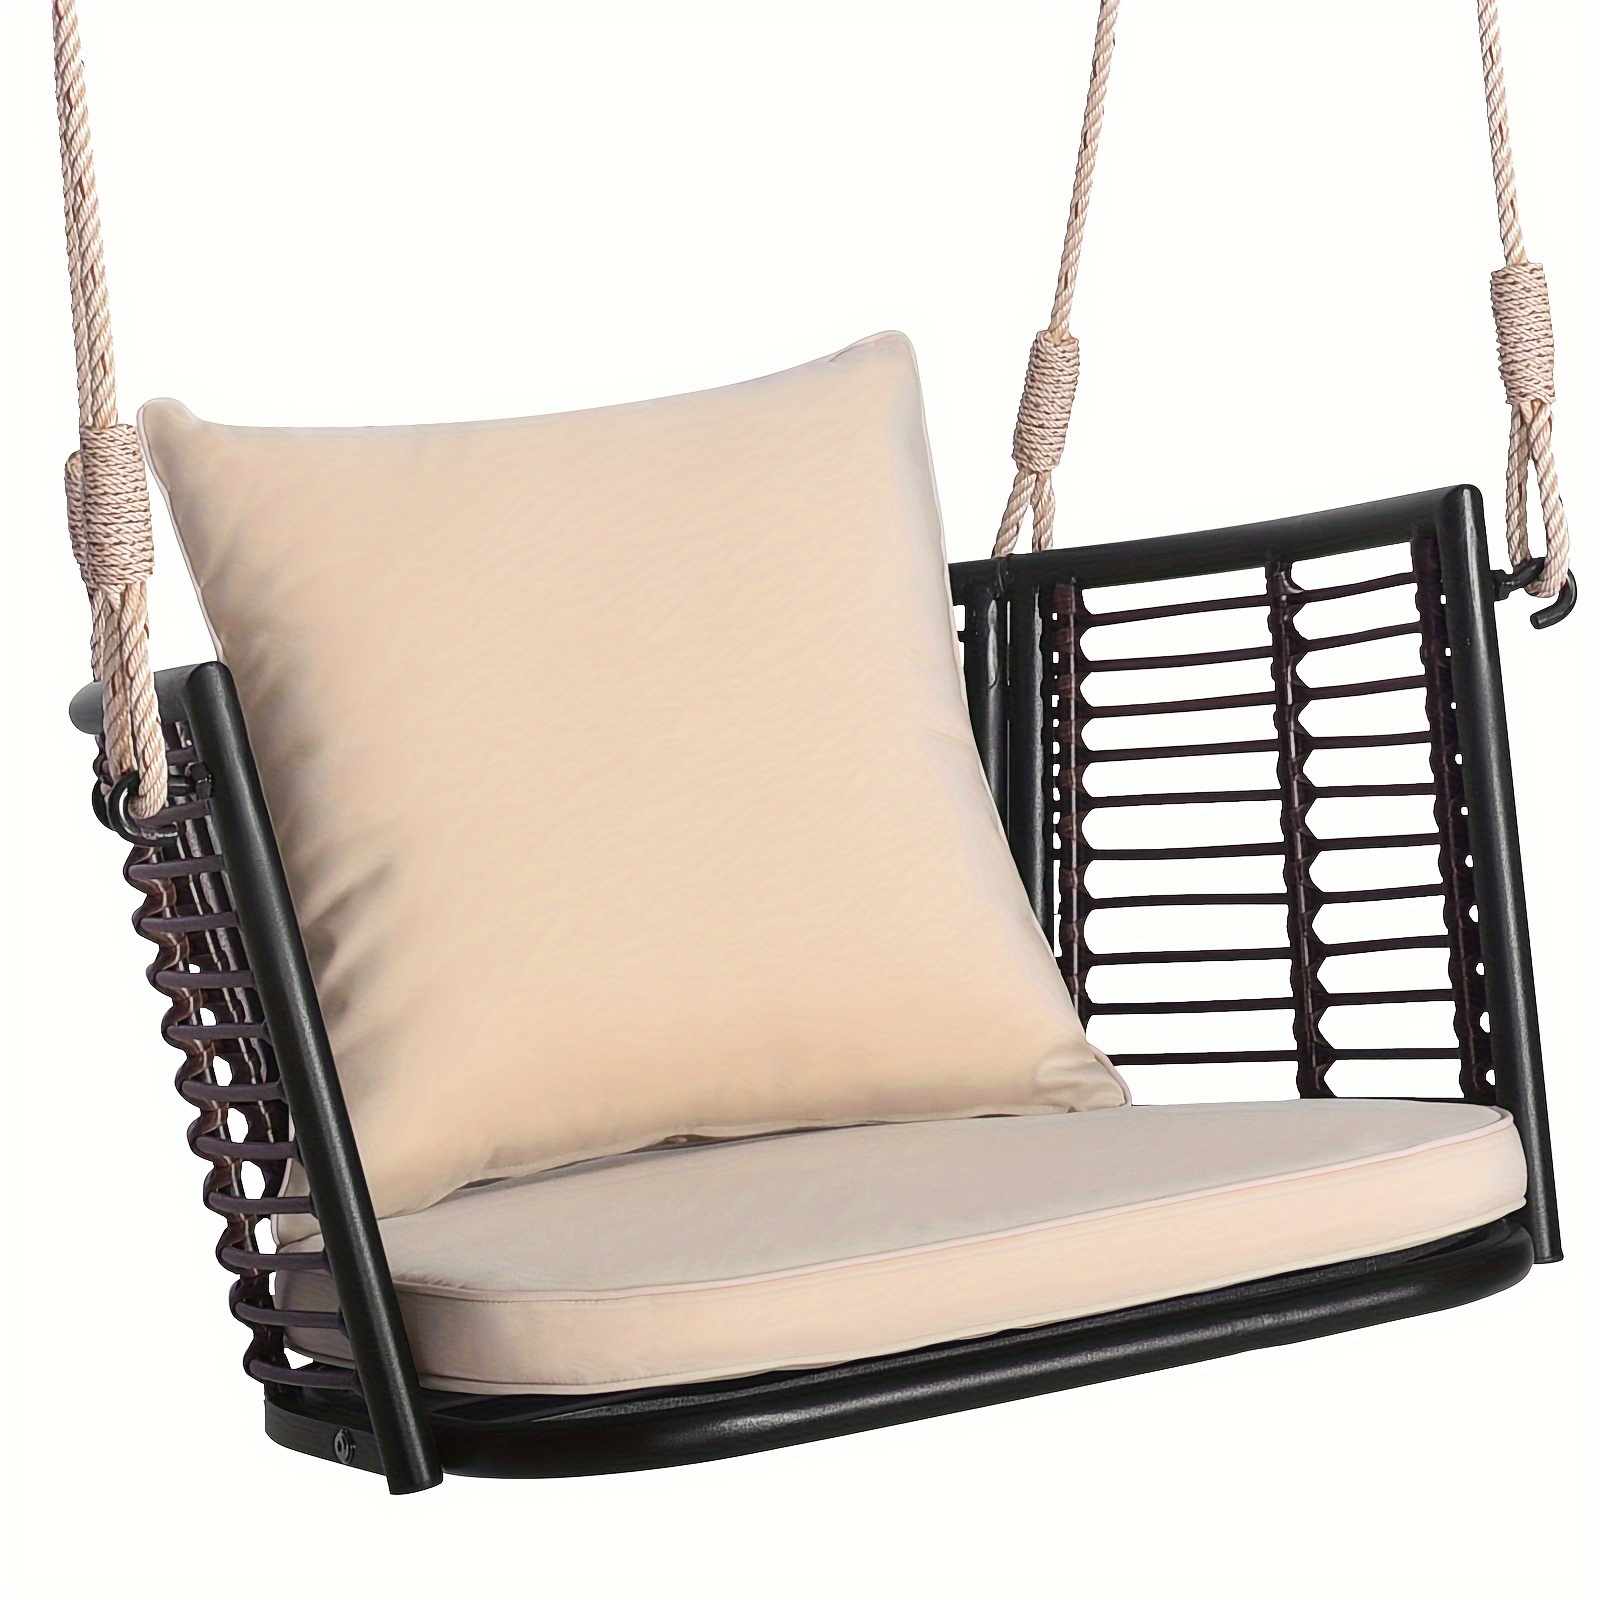 

1pc Rustic Rattan Basket Swing Chair With Cushion, Metal Frame, 6ft Adjustable Rope, Indoor/outdoor Hanging Hammock Chair, Home Garden Patio Decor, Beige